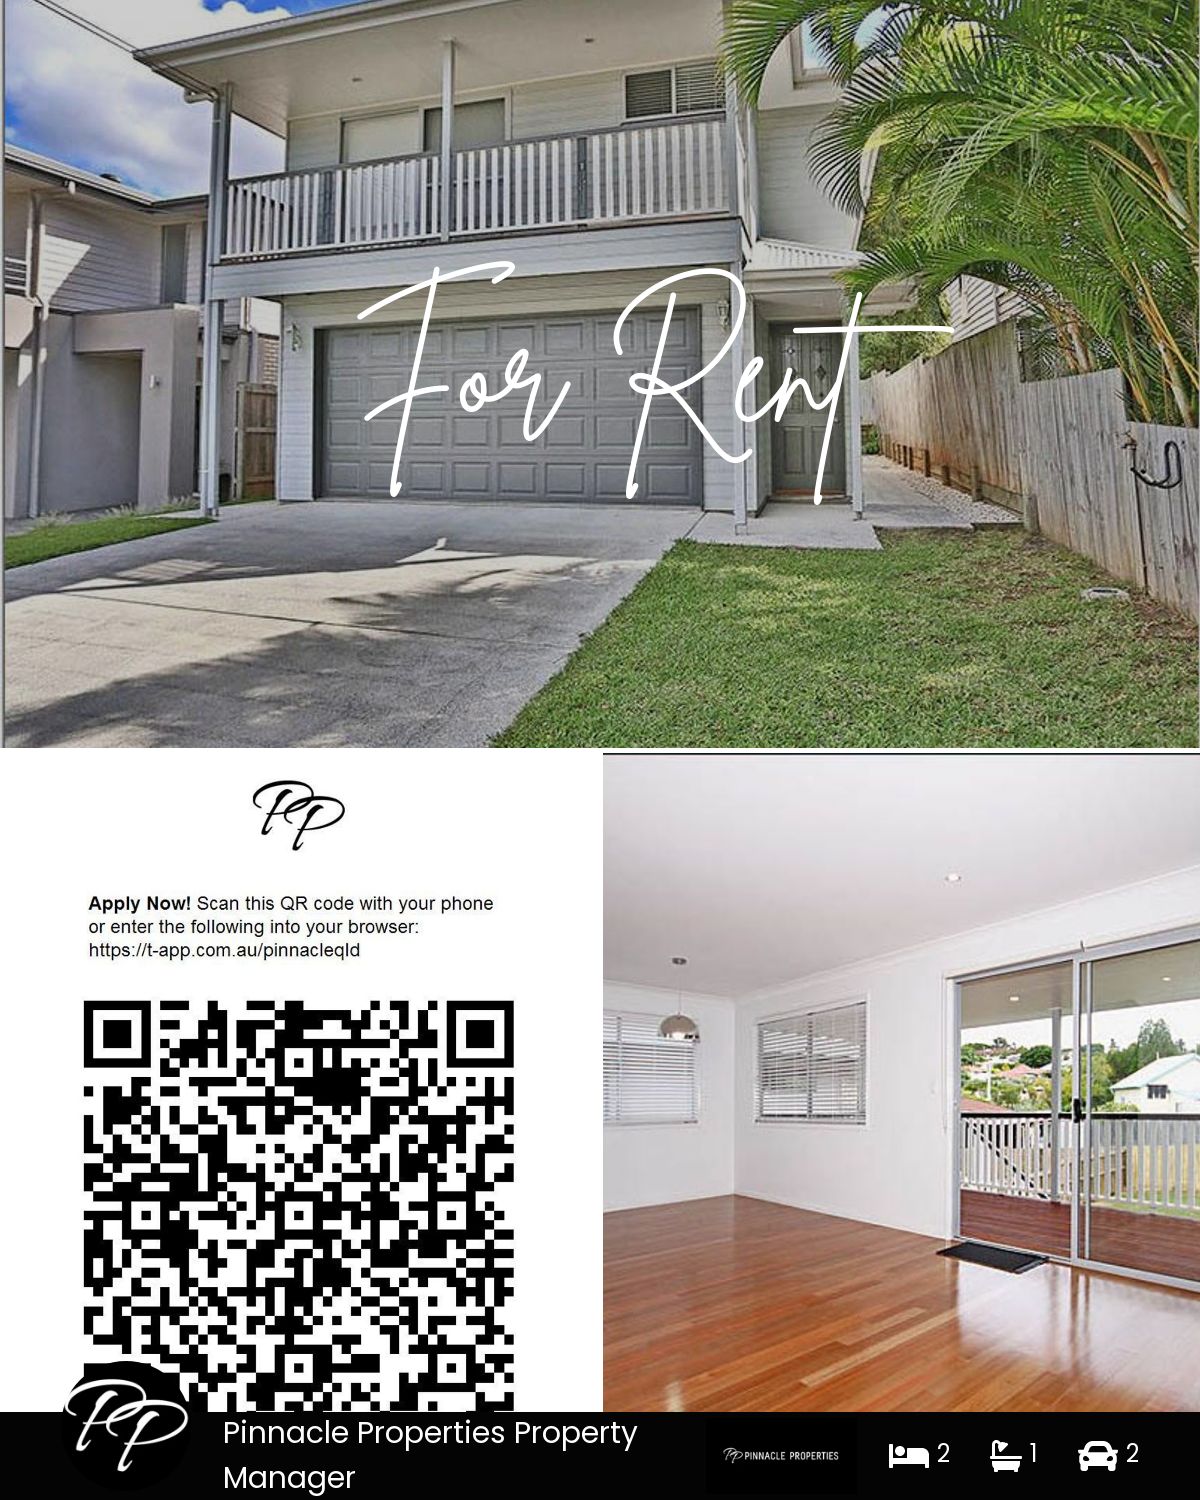 18 Keylar Street, Mitchelton, QLD 4053 | Realty.com.au